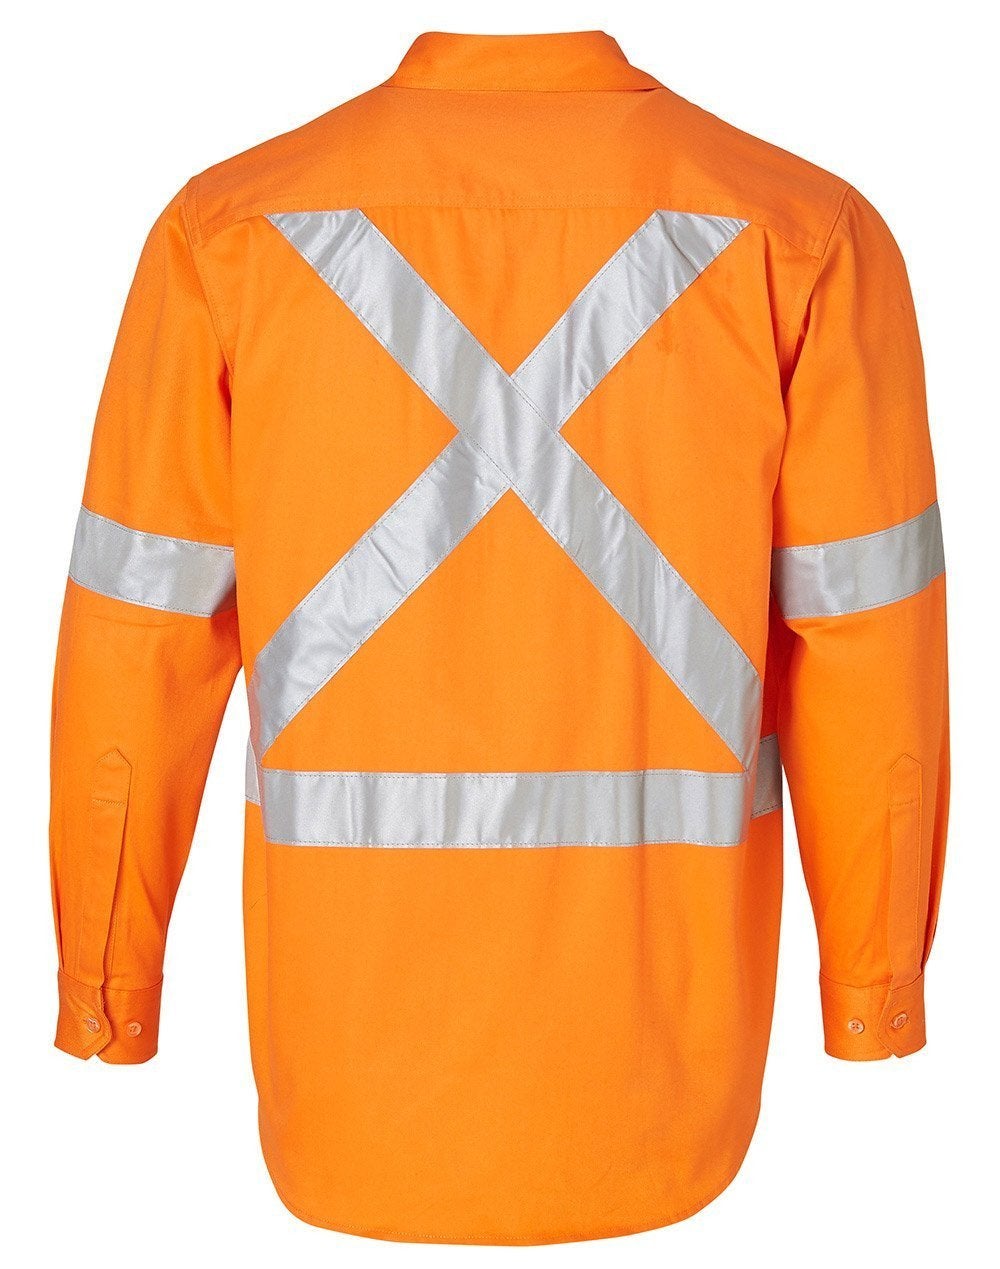 Cotton Drill Safety Shirt